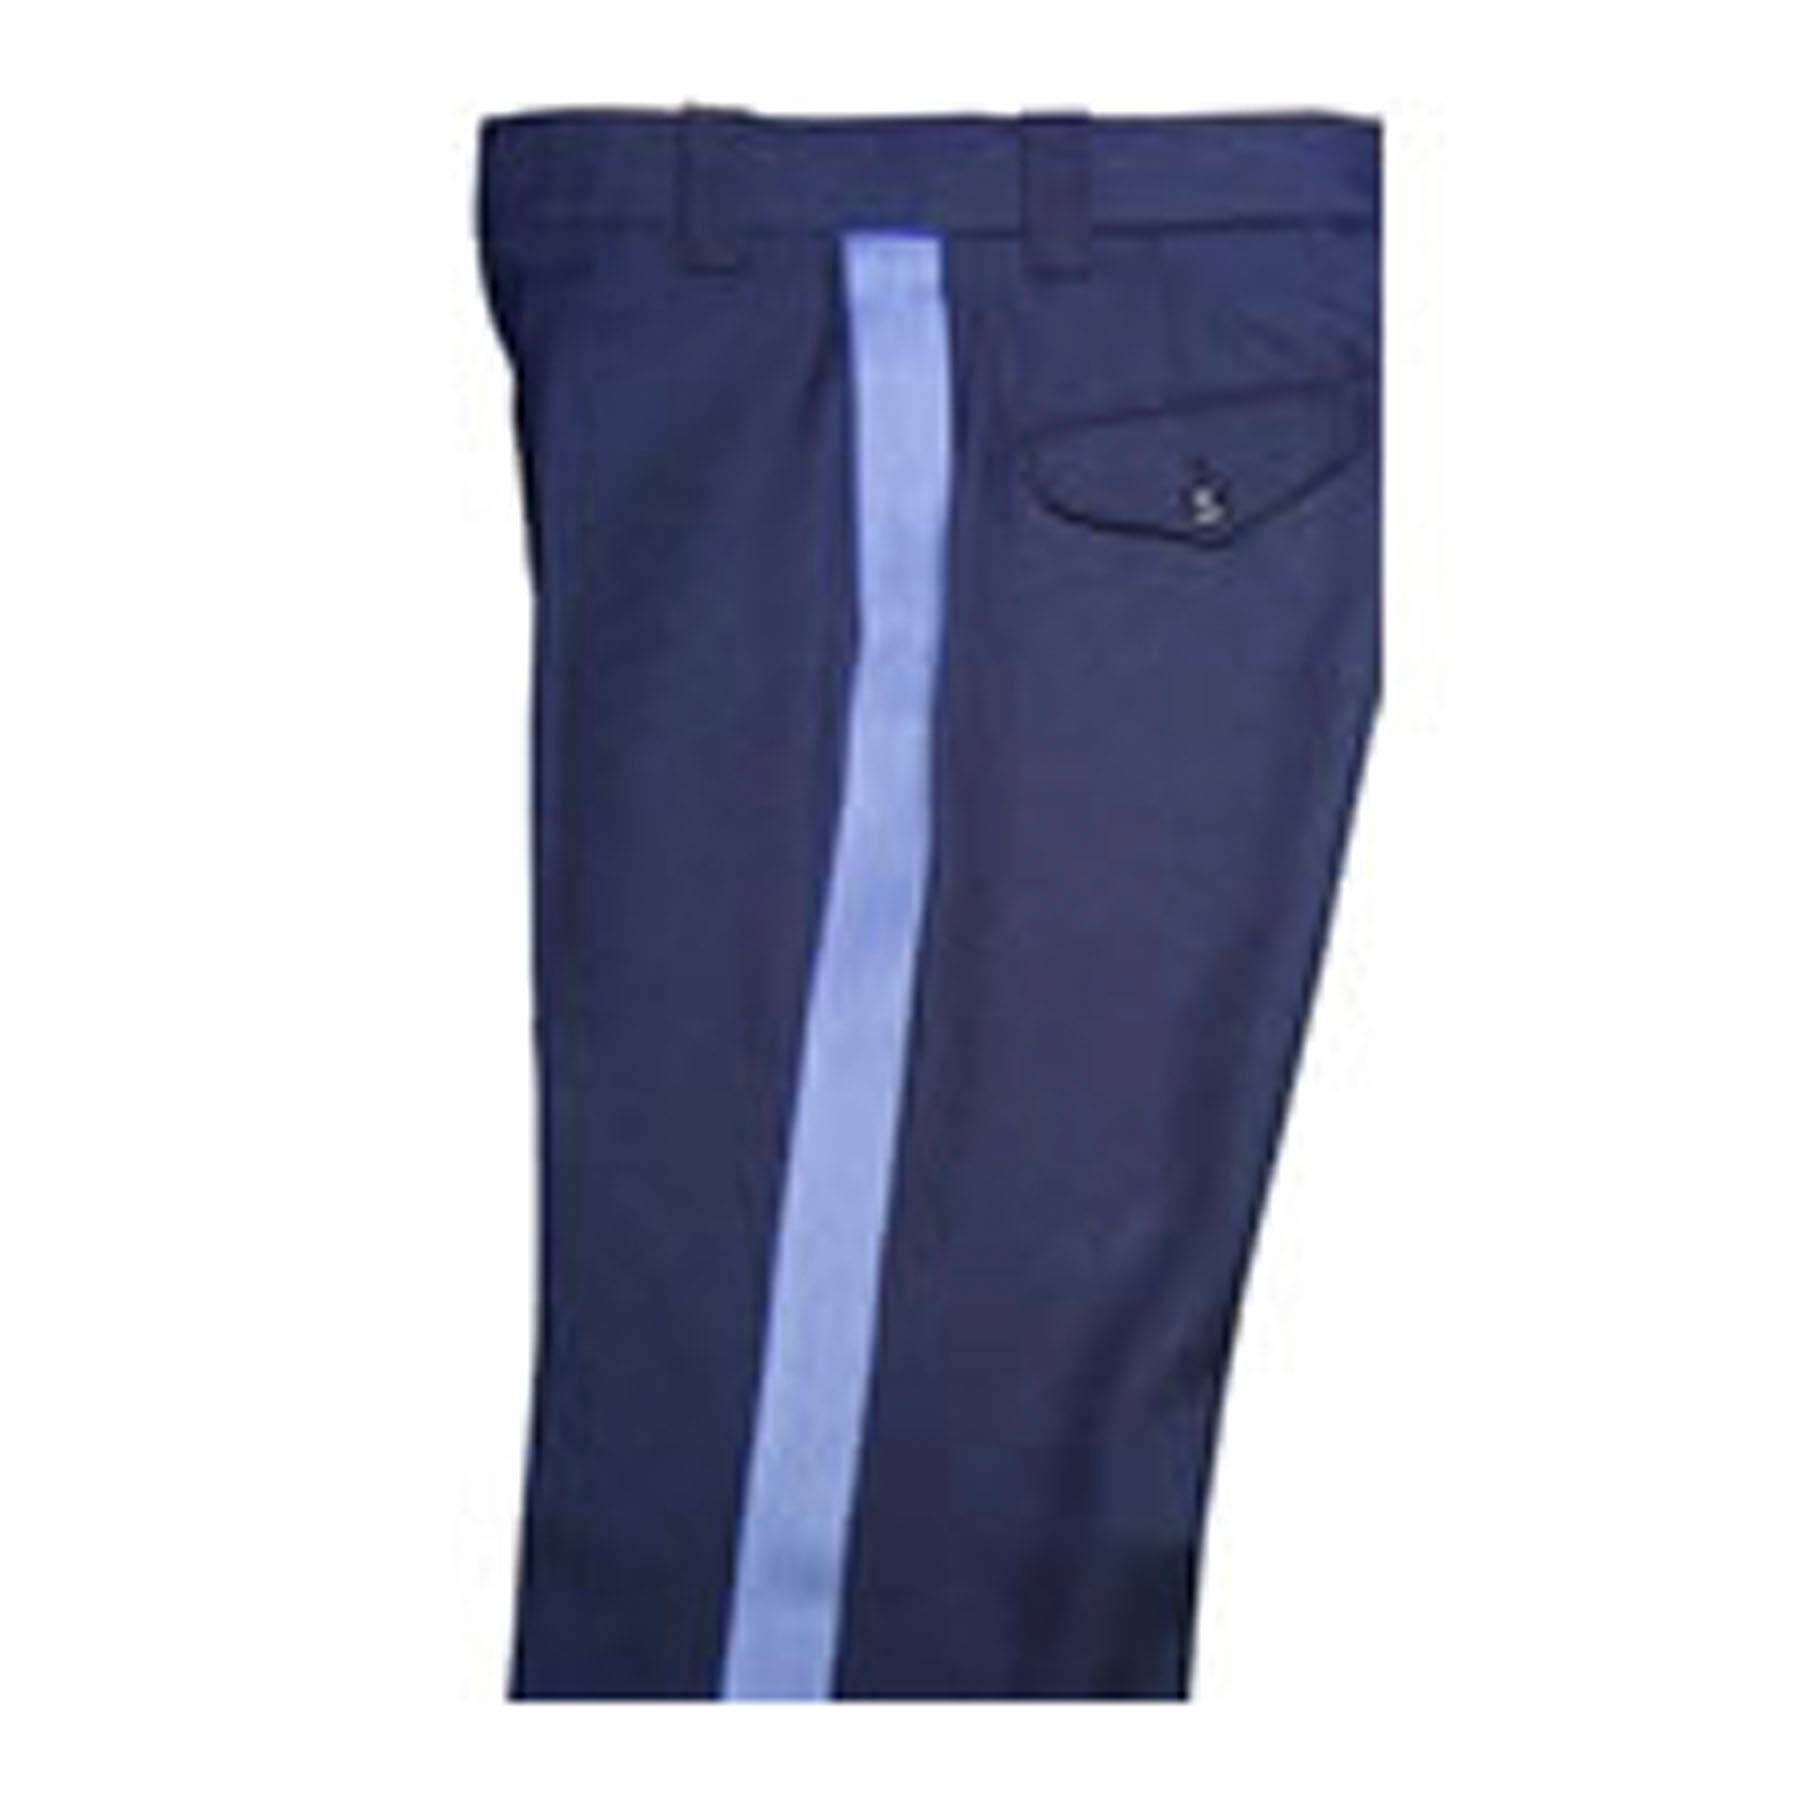 police cargo pants navy blue